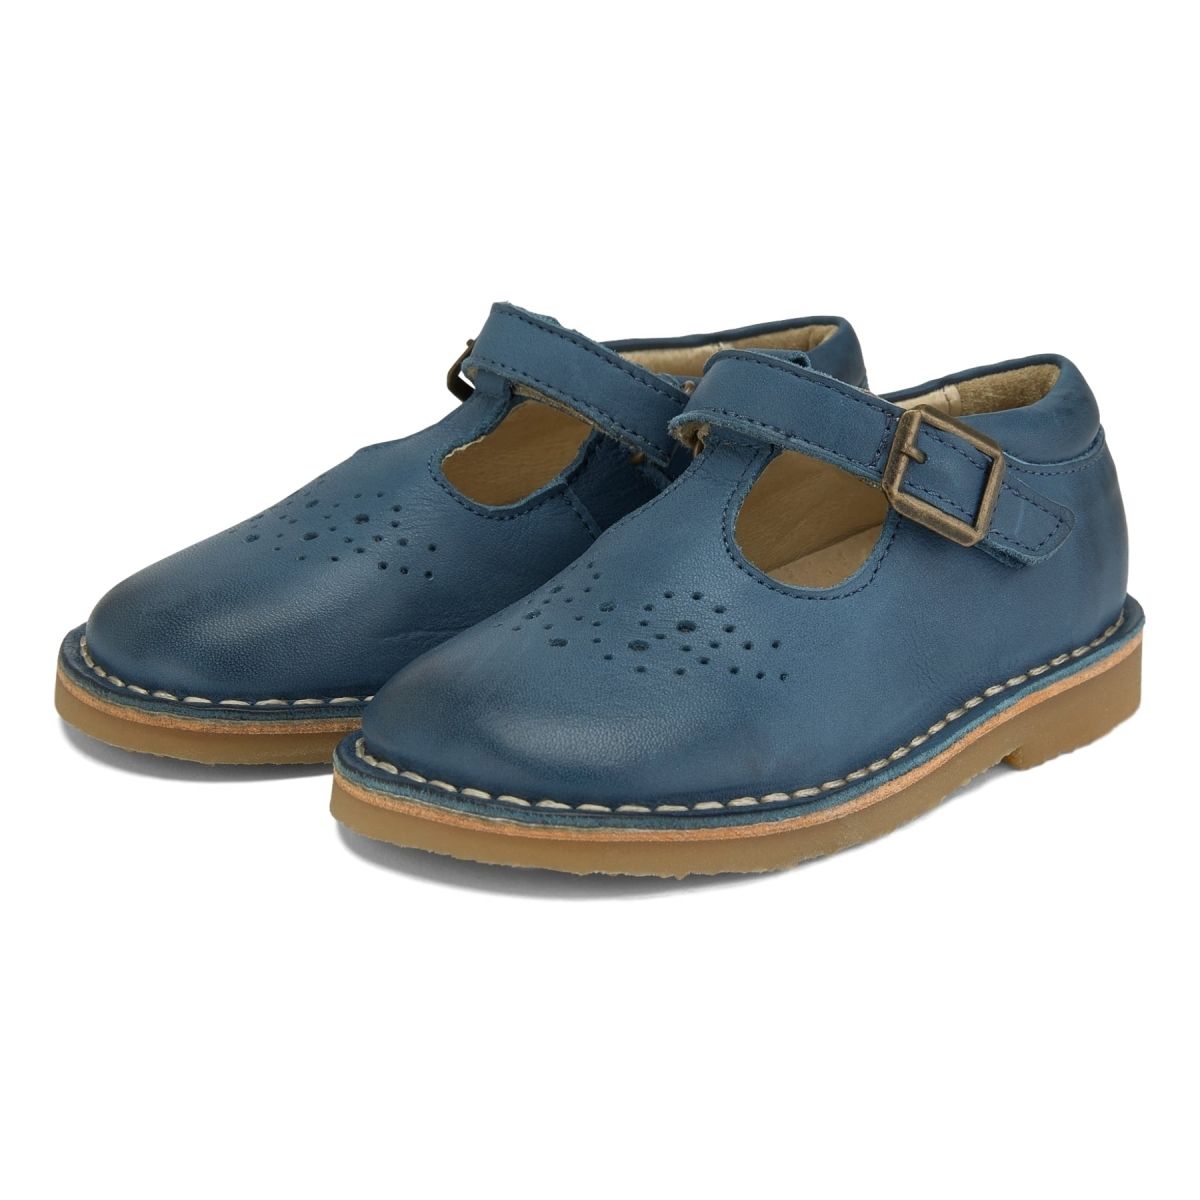 blue t bar shoes uk